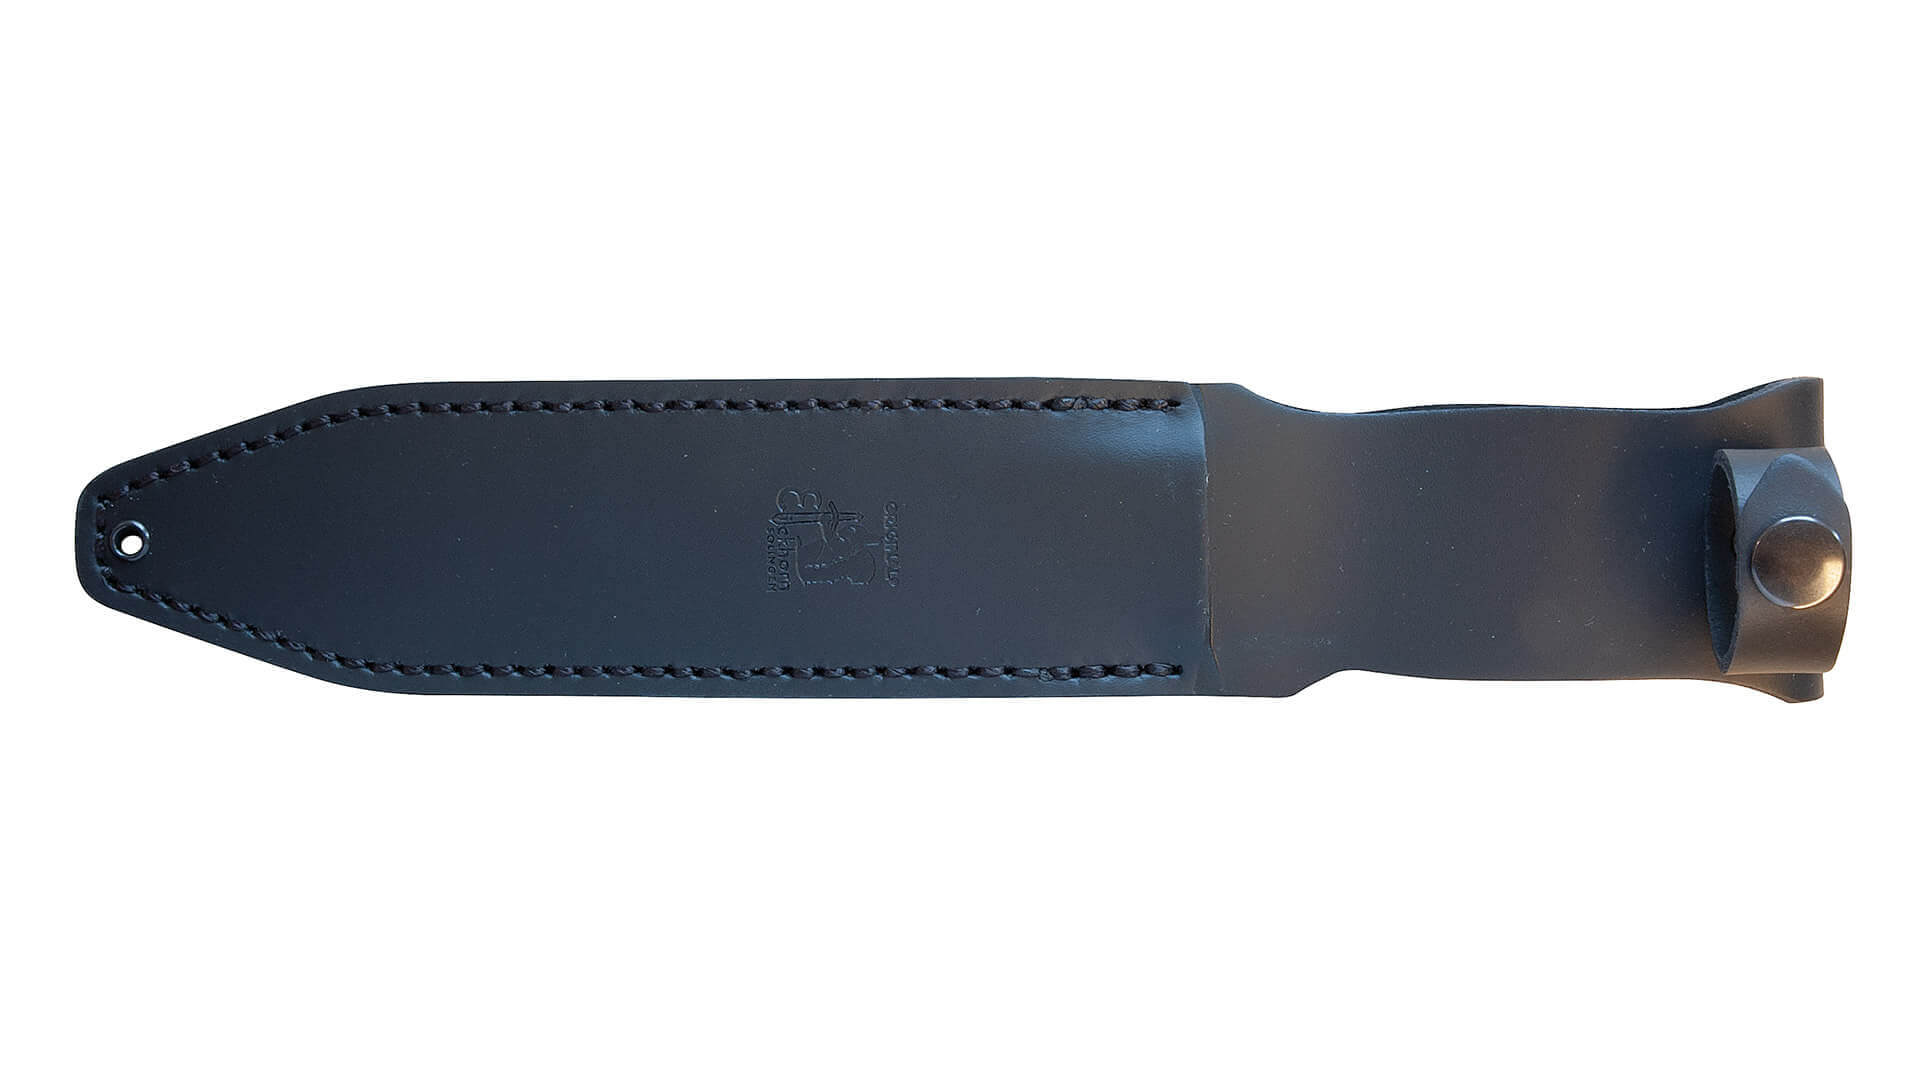 Eickhorn-forester-1-beryllium-hunting-knife-outdoor-knife-leather-sheath-buy